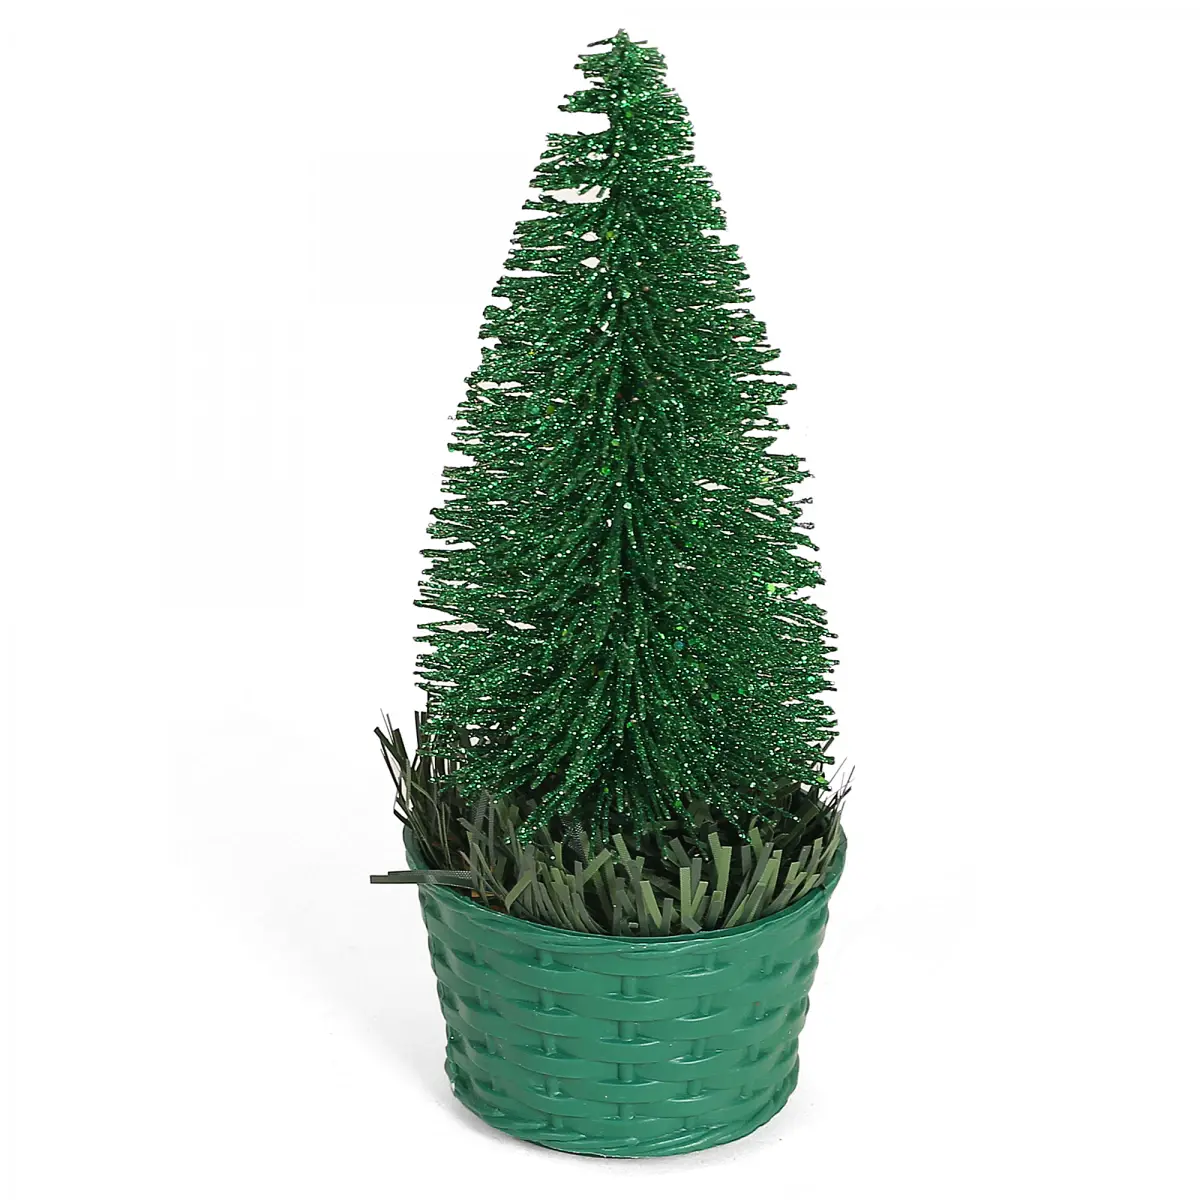 Boing Christmas Tree Decorations, 18cm, Green